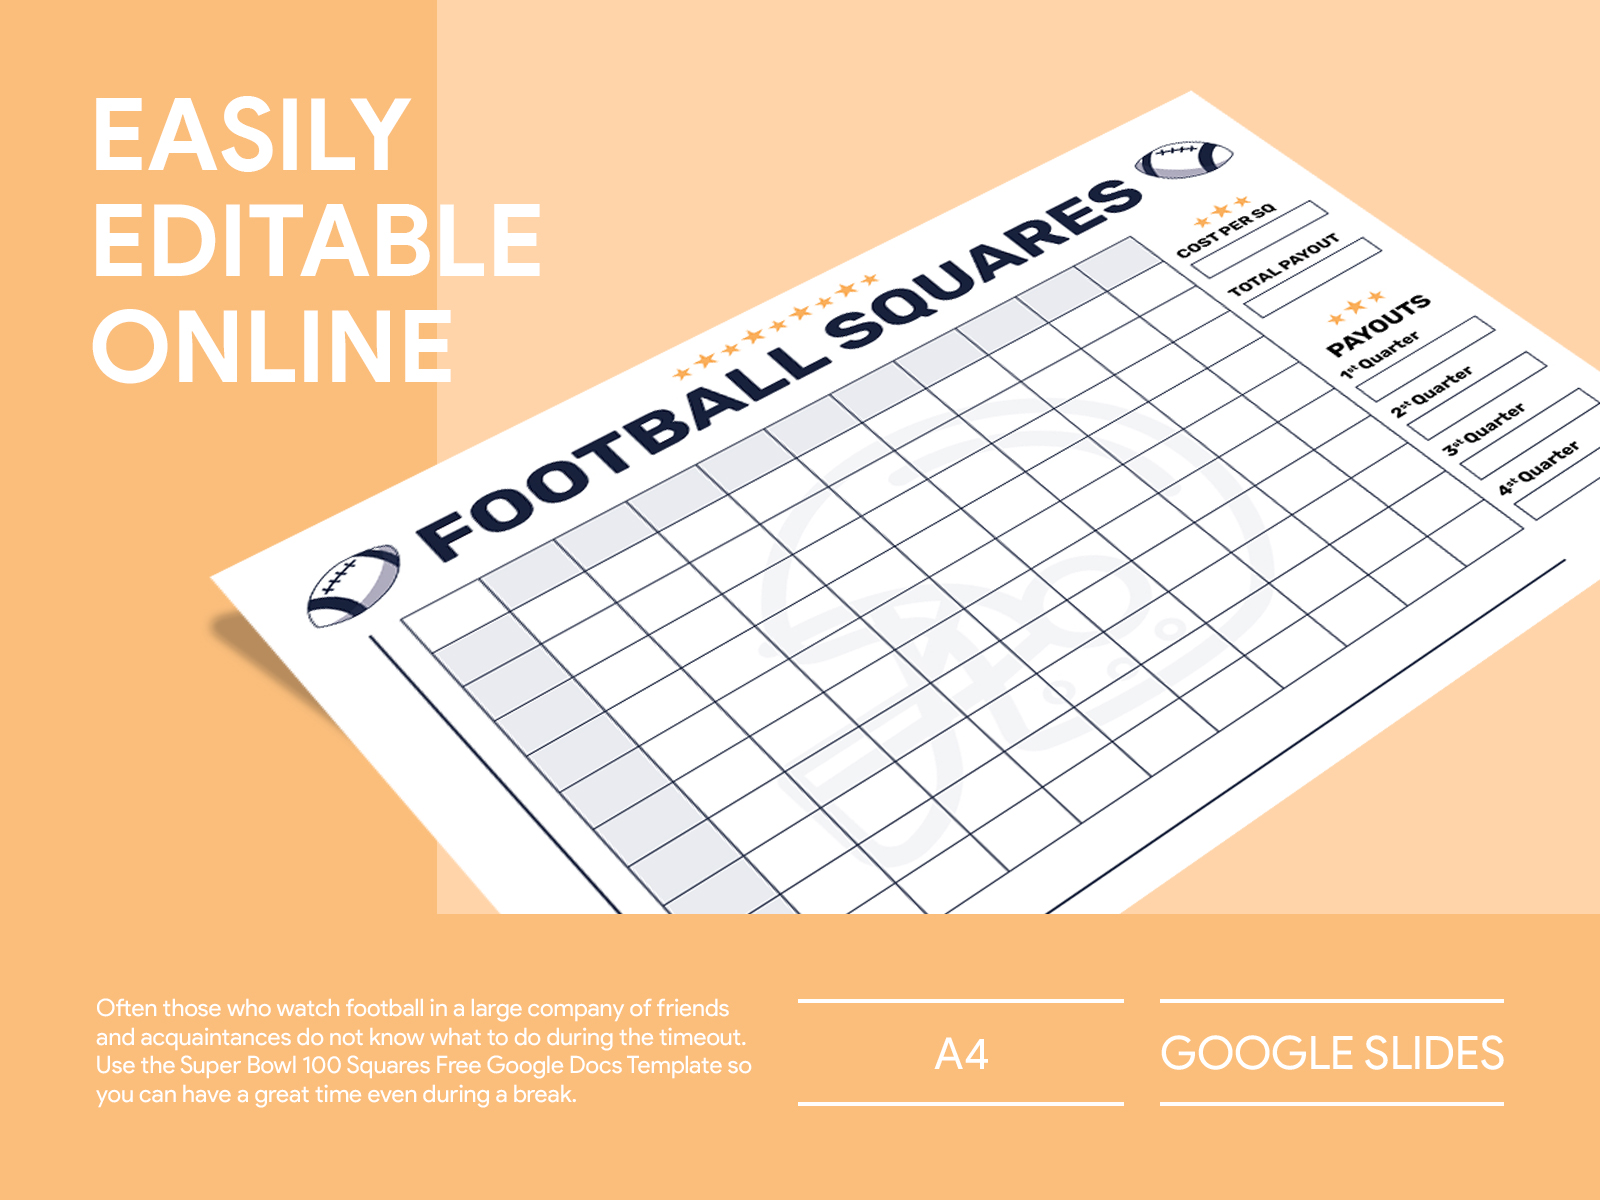 fantasy football draft board google sheets